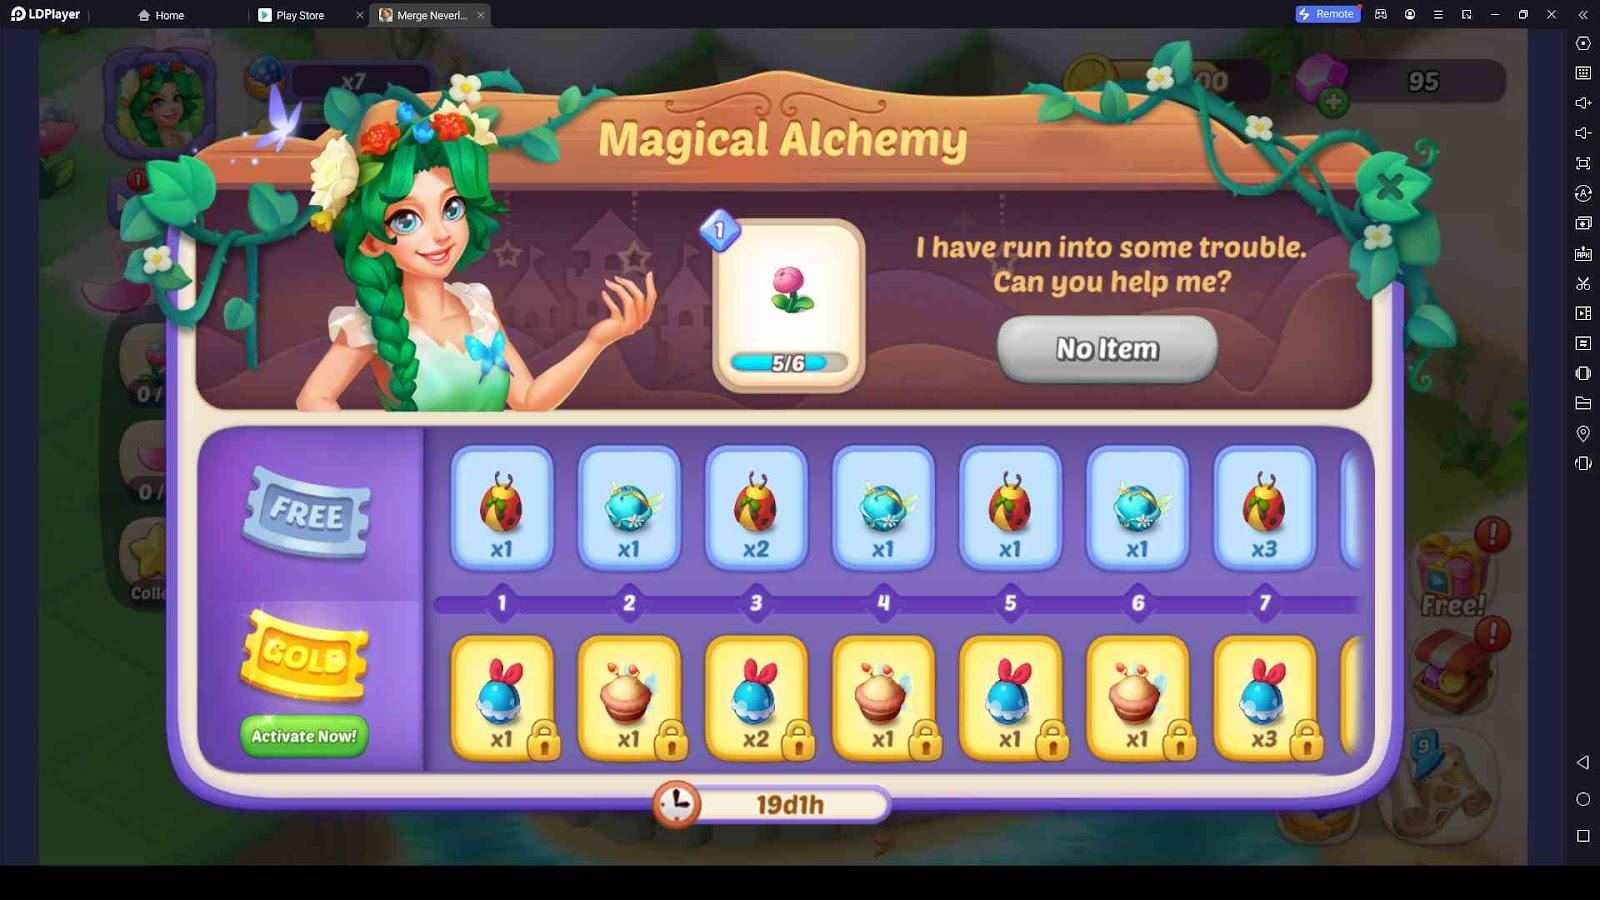 Do Magical Alchemy